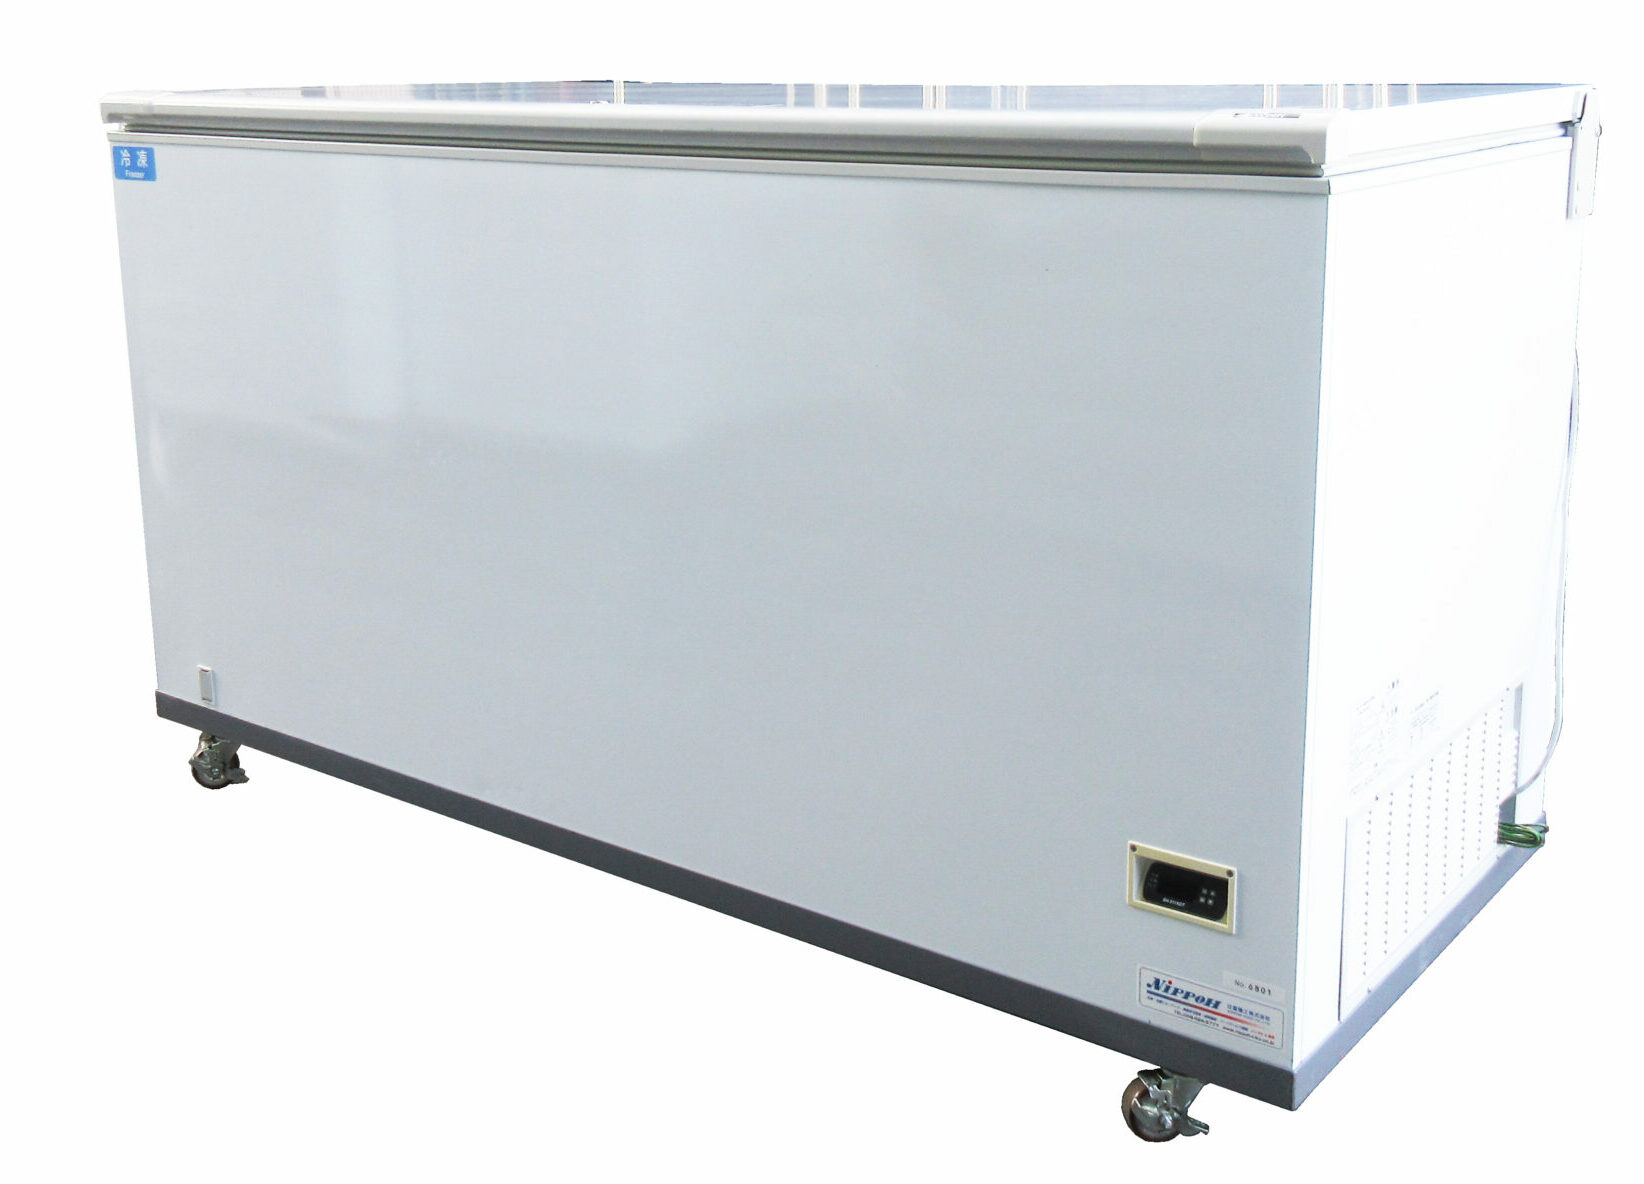 SRF-K961SB パナソニック 業務用冷凍庫 たて型冷凍庫 インバーター制御 センターピラーレス - 3